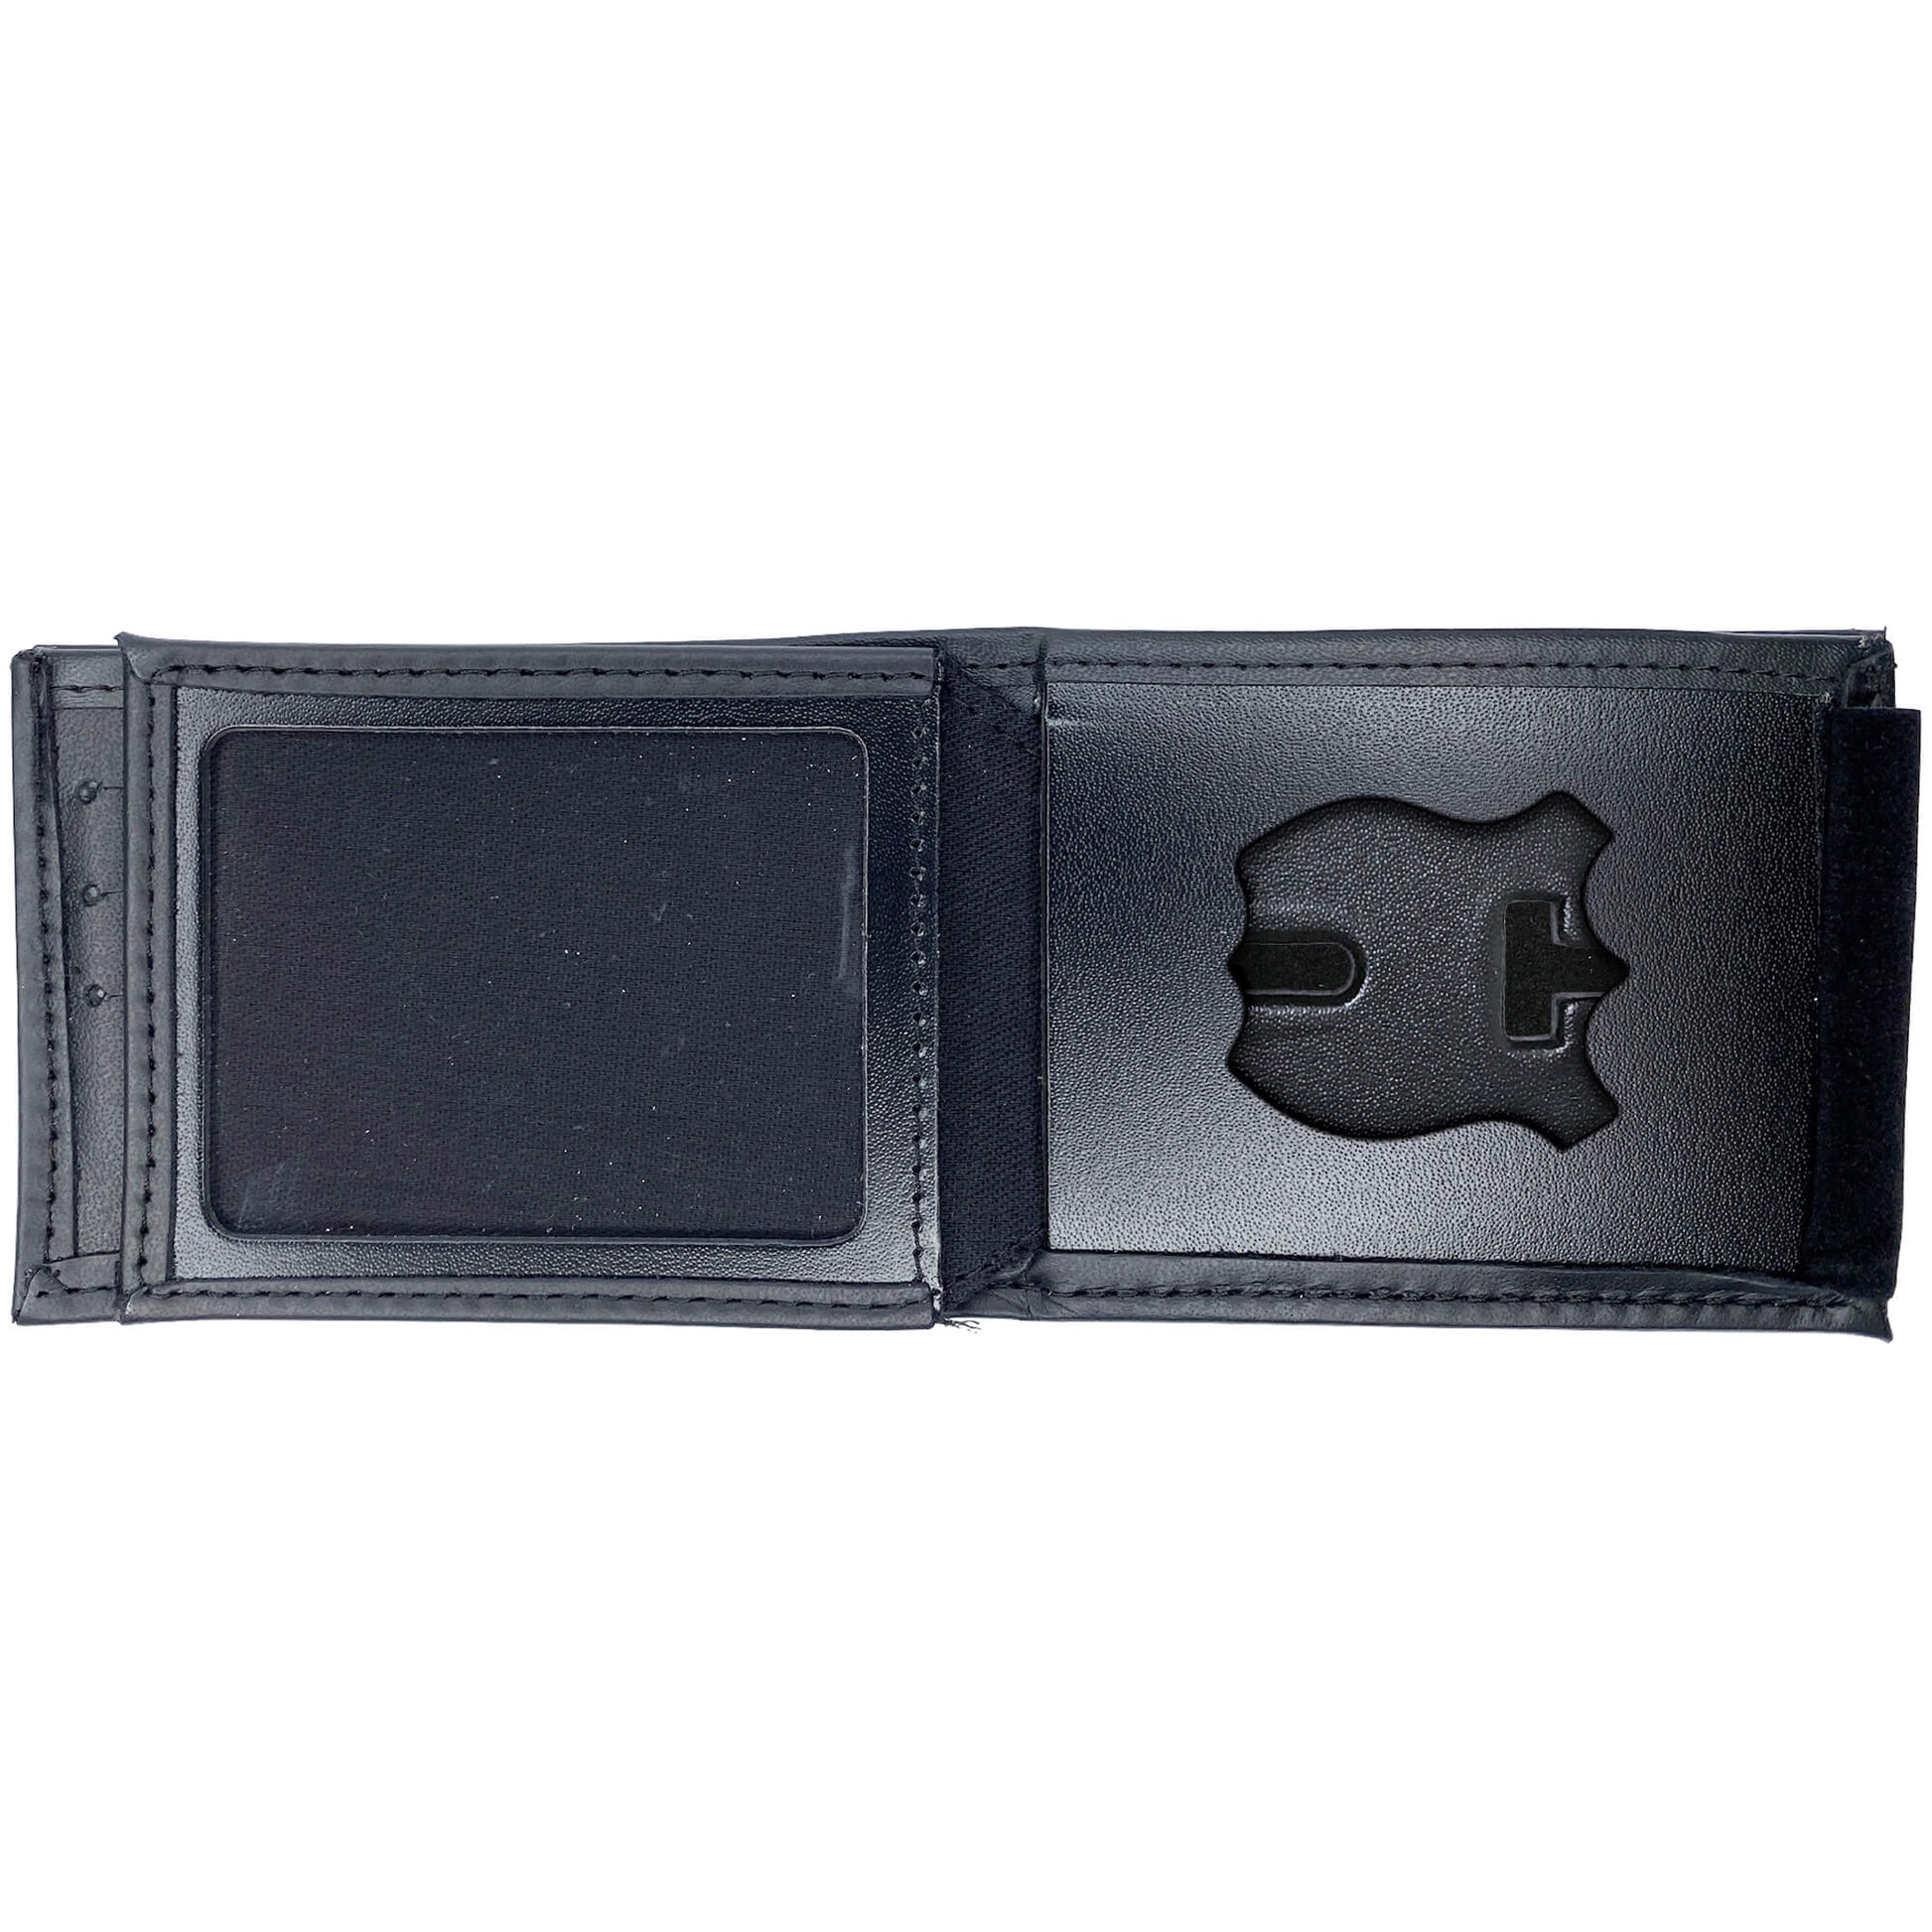 Nishnawbe Aski Police Hidden Badge Wallet-Perfect Fit-911 Duty Gear Canada